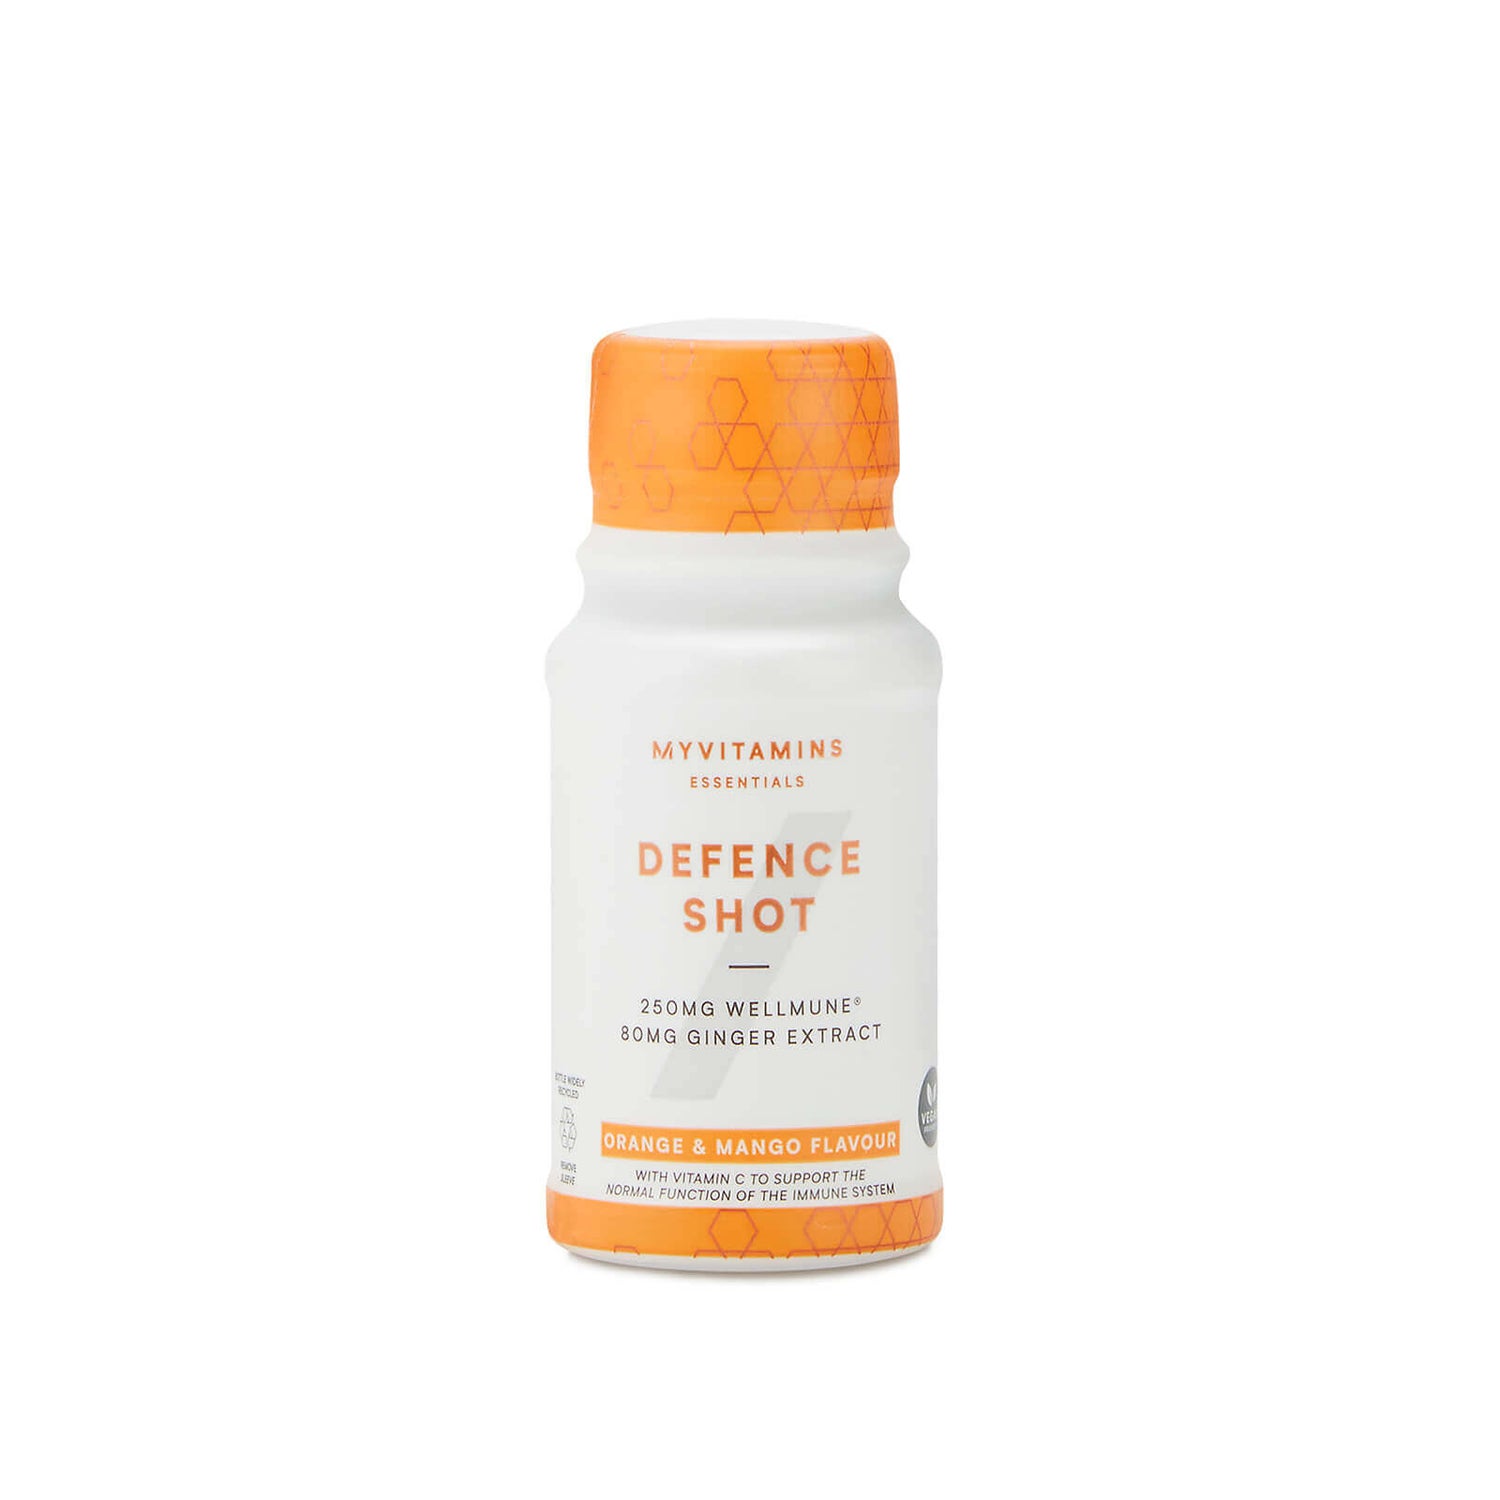 Myvitamins Defence Shot (Sample) - Orange & Mango